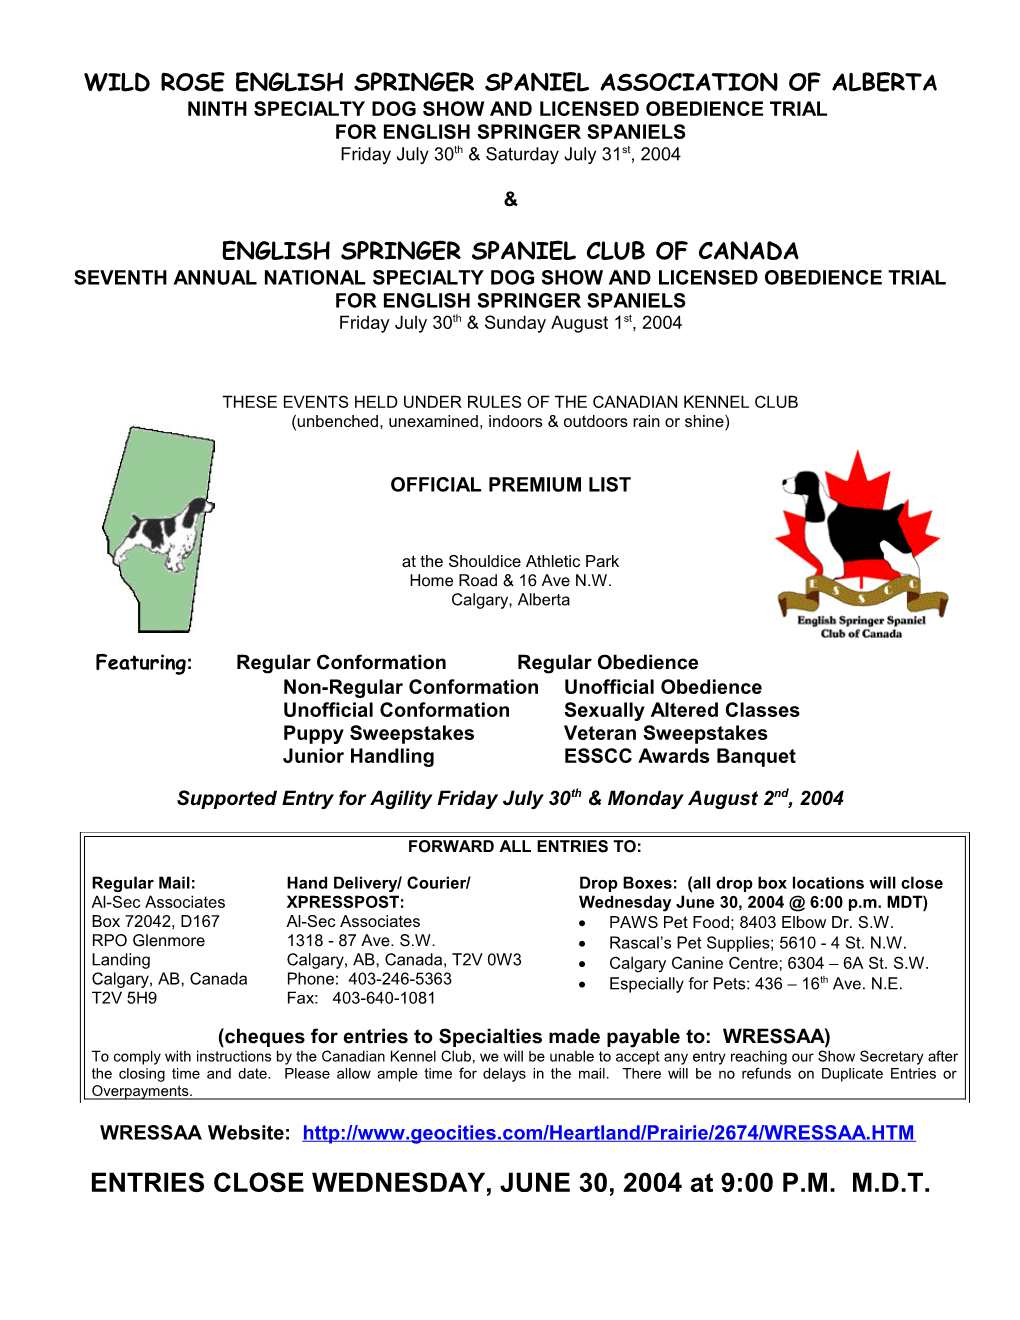 Wild Rose English Springer Spaniel Association of Alberta